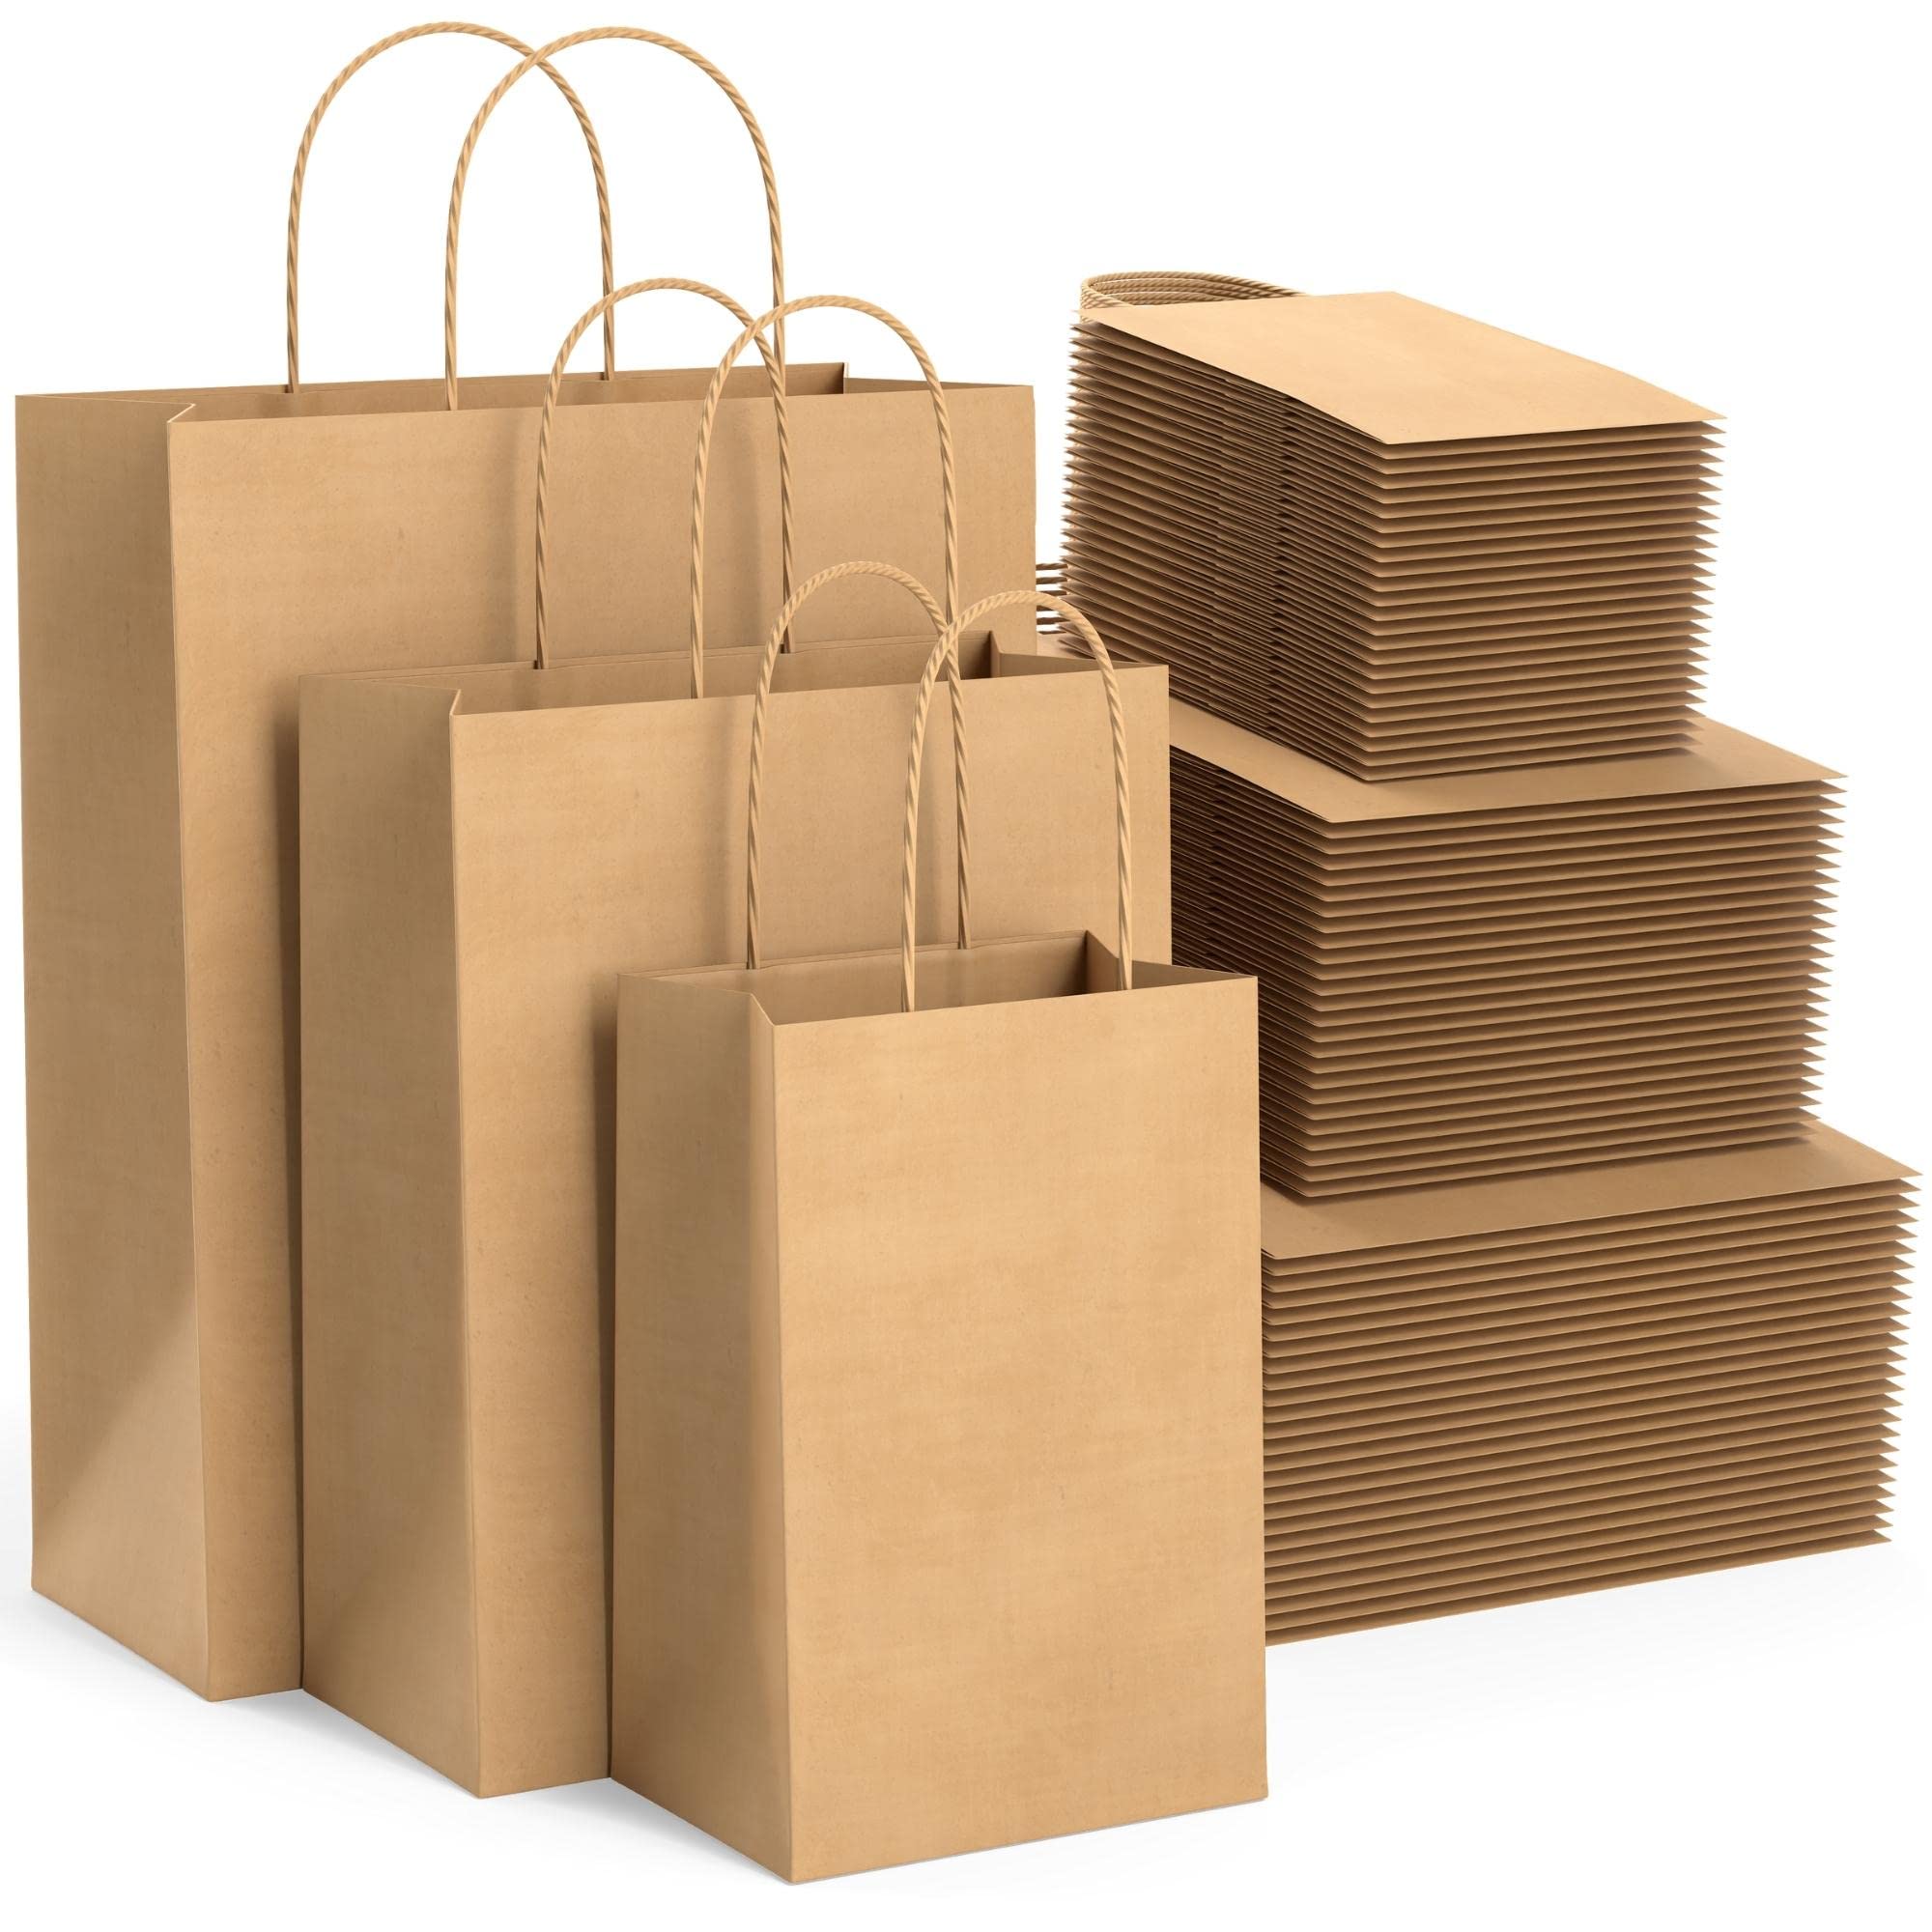 9 Amrita Bags Supplier. ideas | bags, jute bags, printed bags